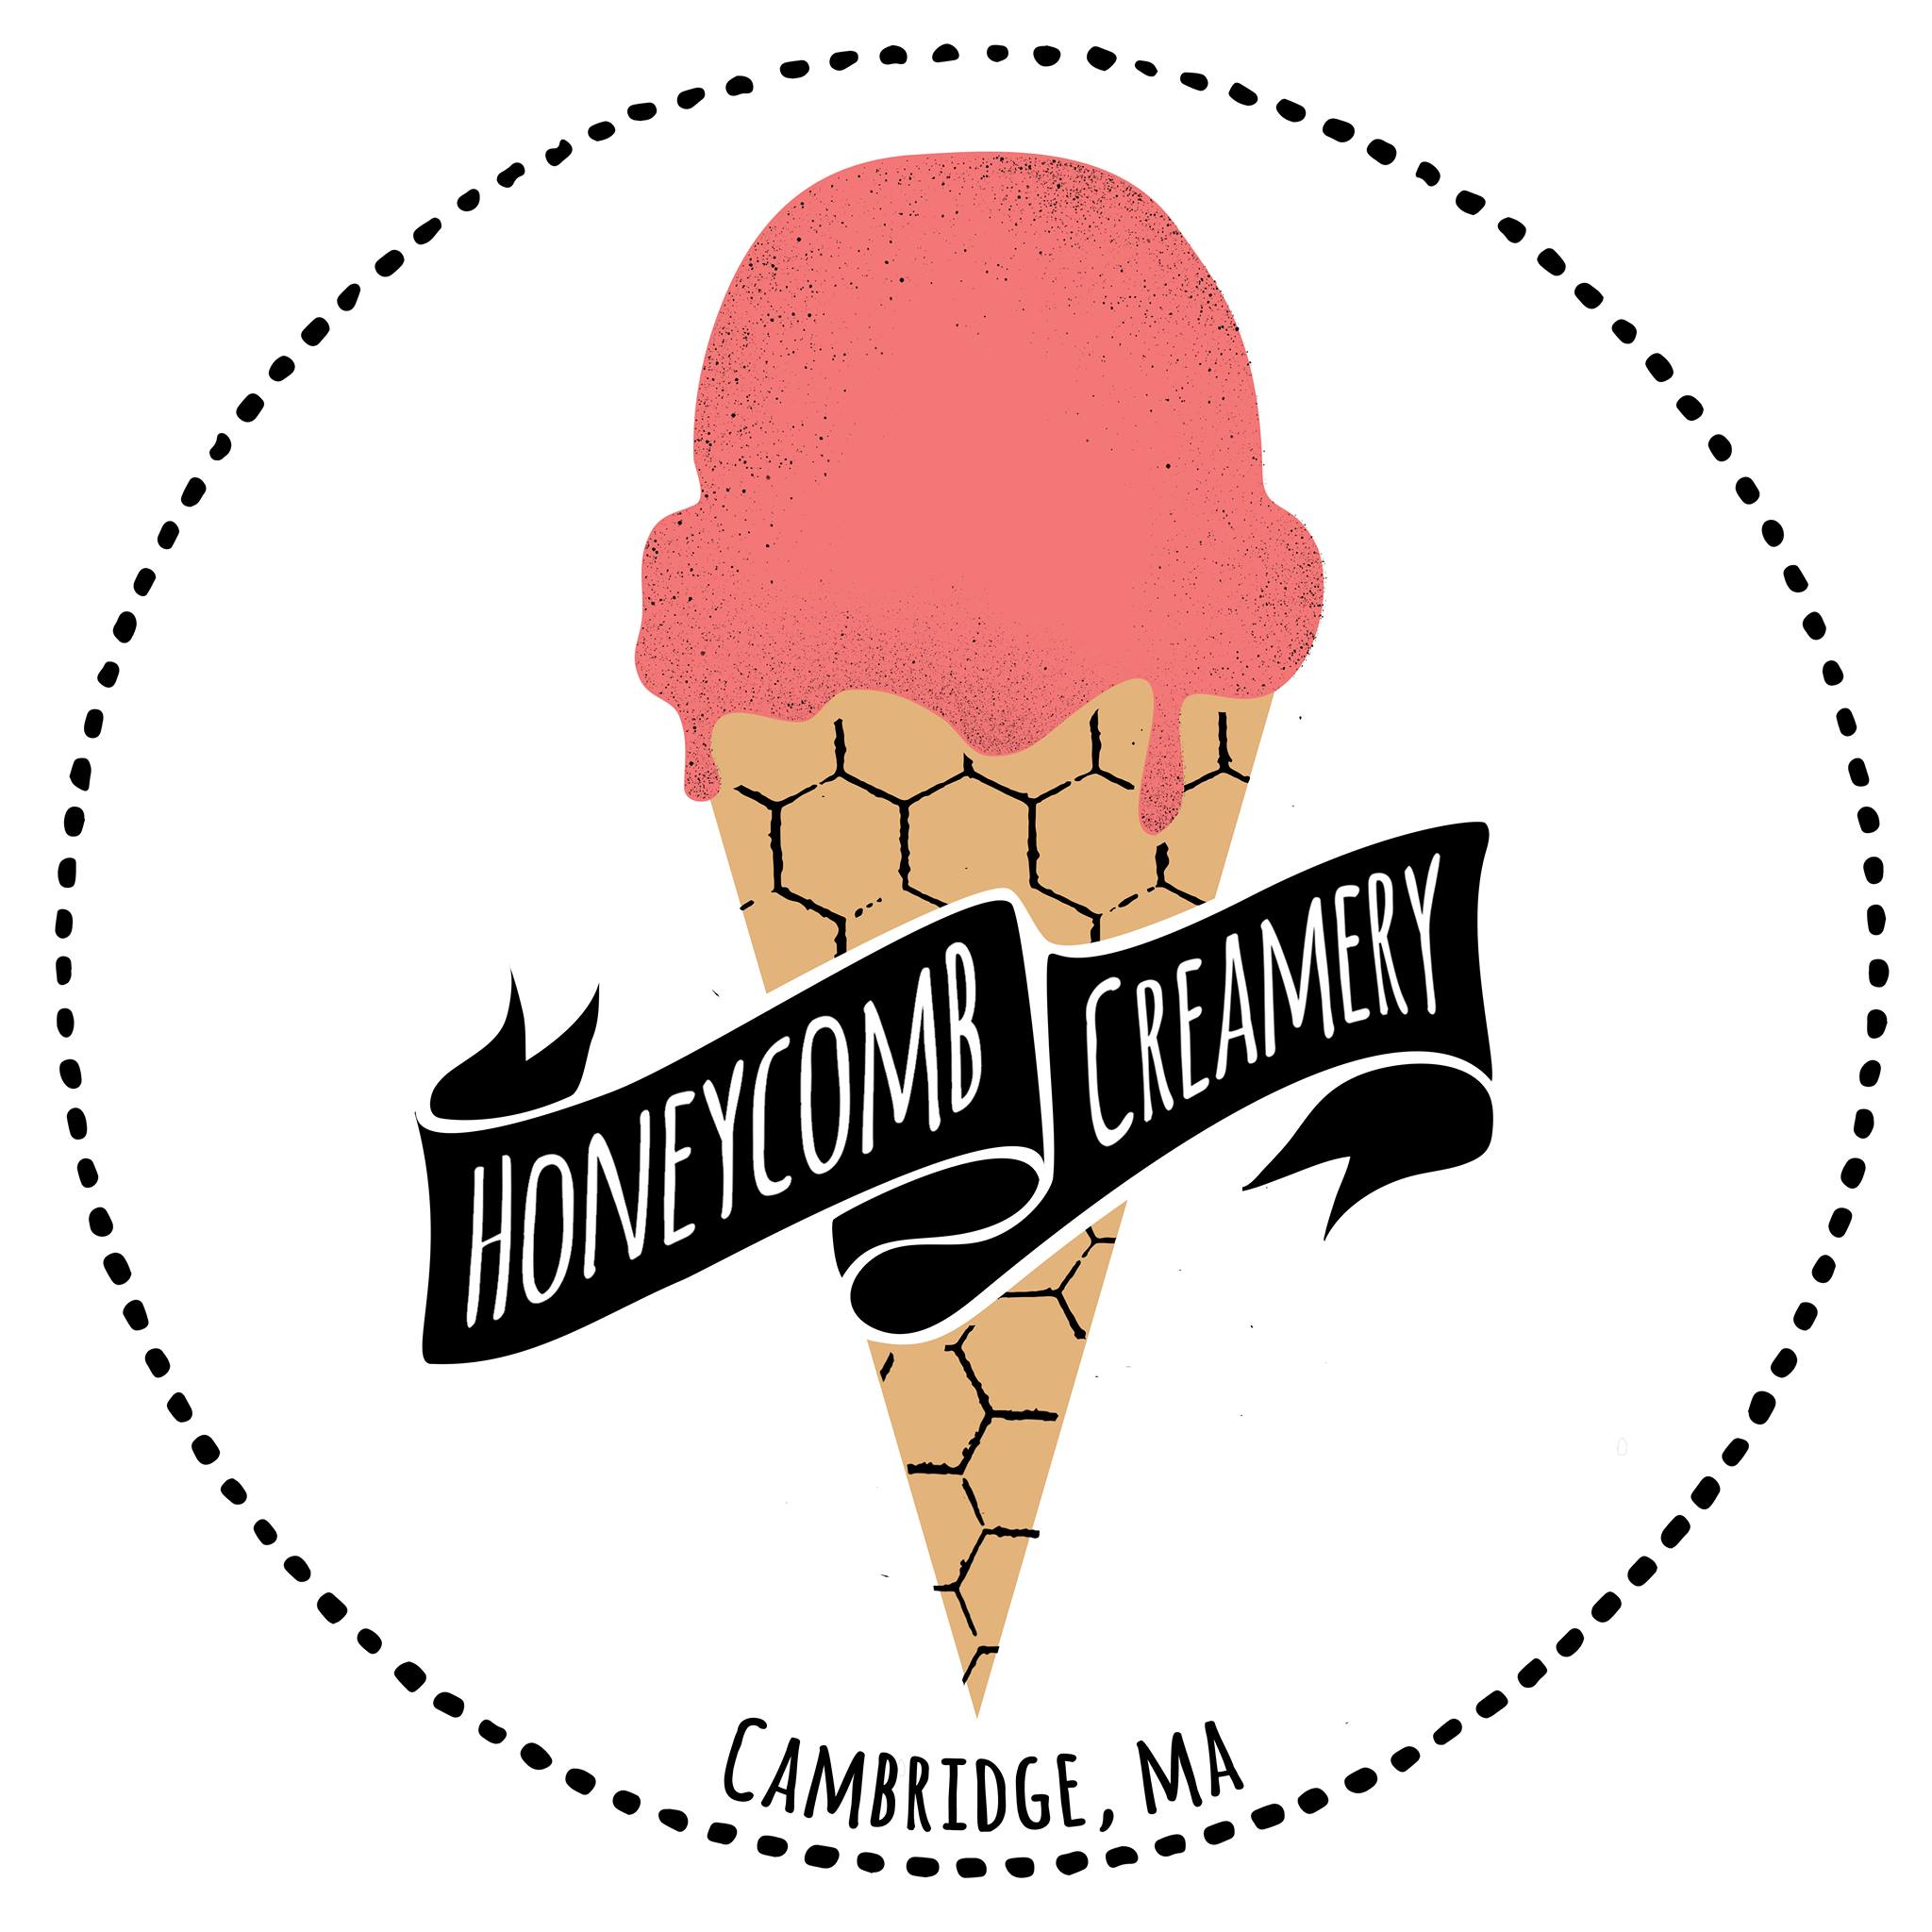 Honeycomb Creamery's logo